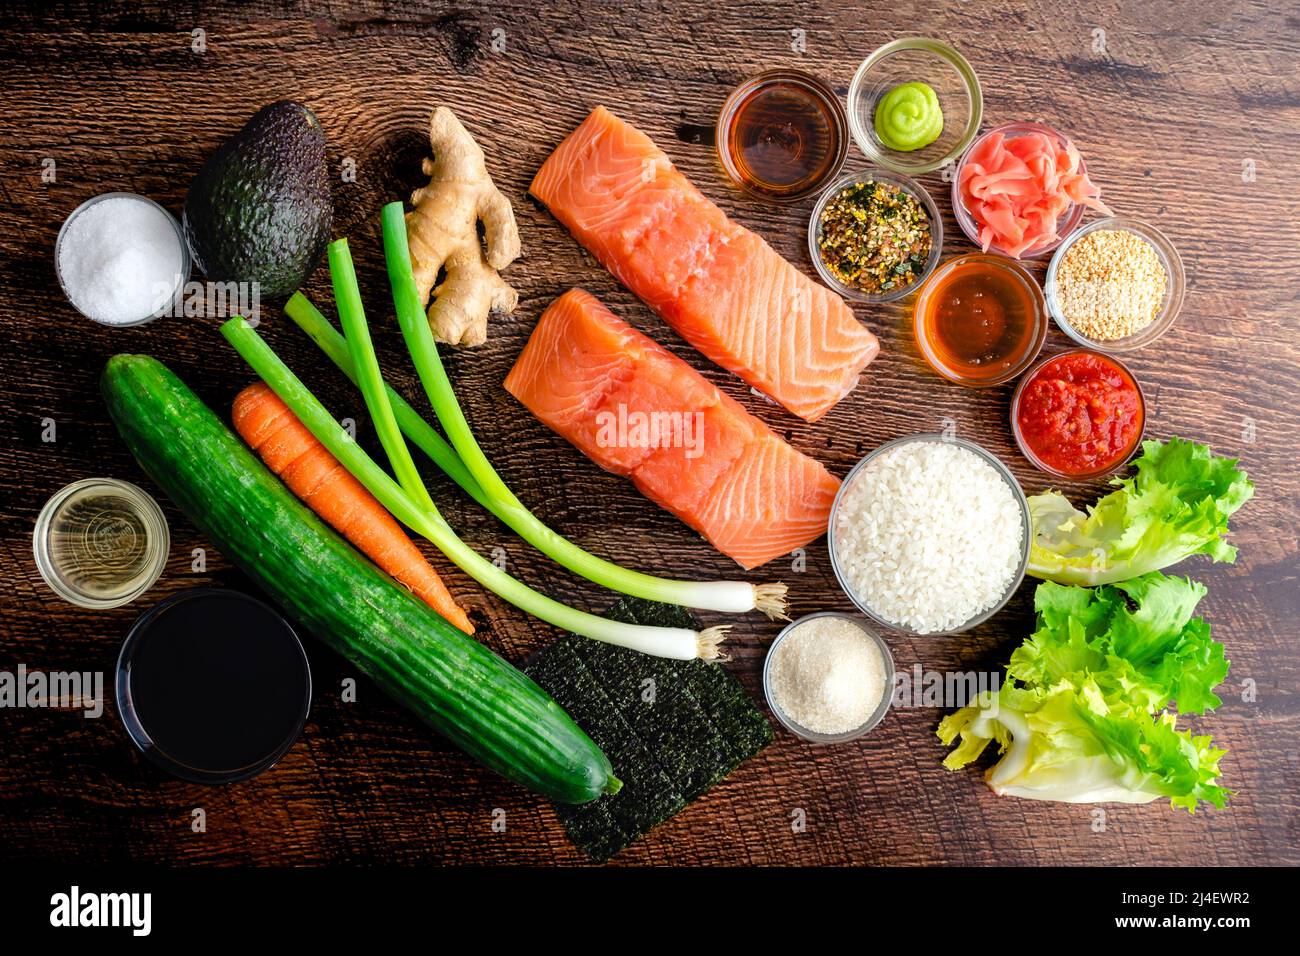 Salmone piccante Sushi Bowl ingredienti: Salmone crudo, riso sushi, verdure e altri ingredienti Foto Stock